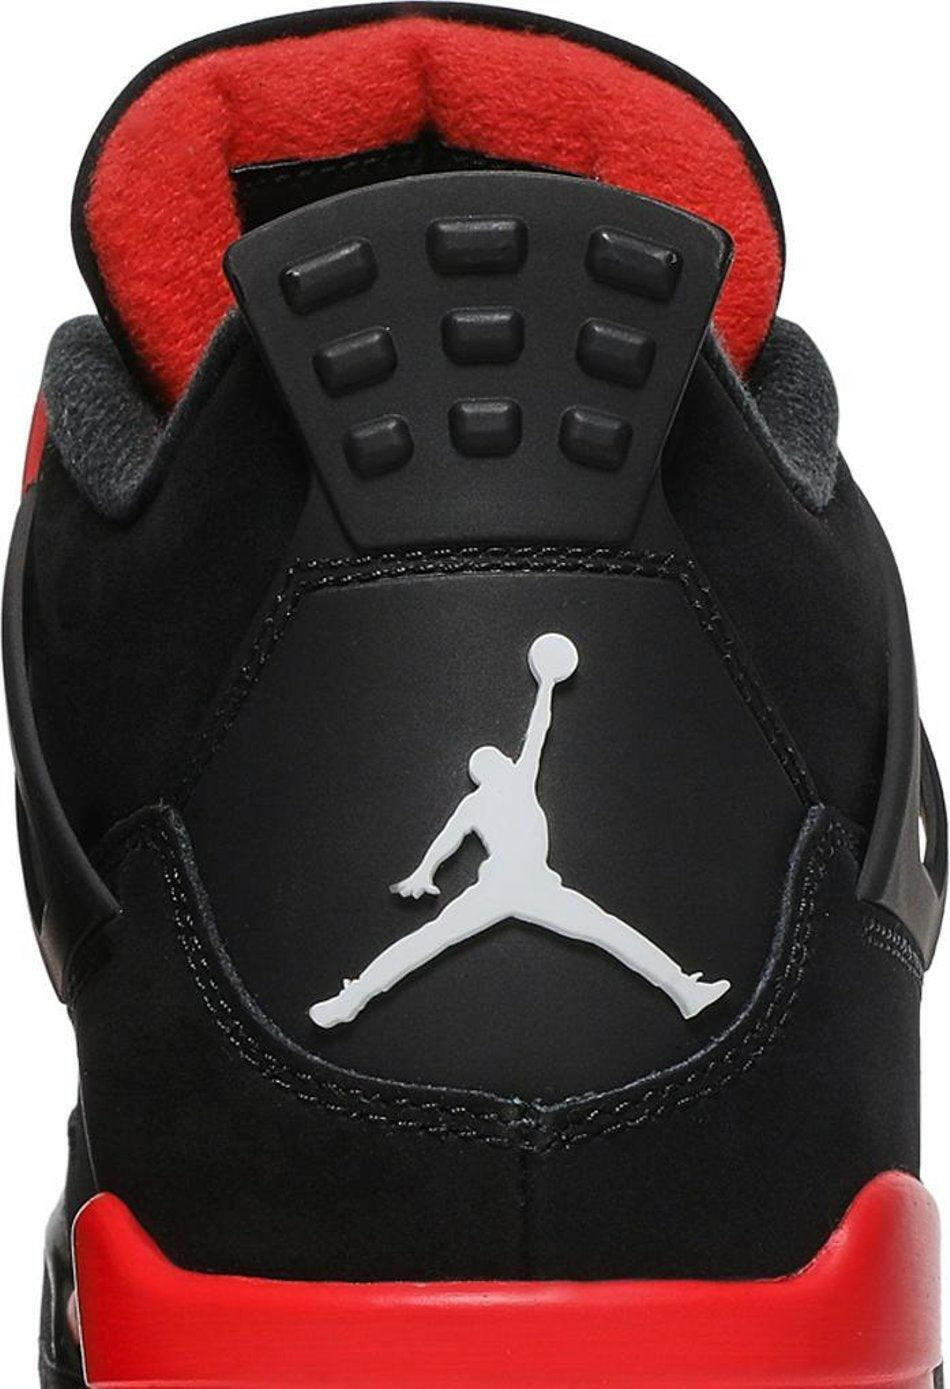 Nike Air Jordan 4 Retro Shoes Red Thunder Black Palestine